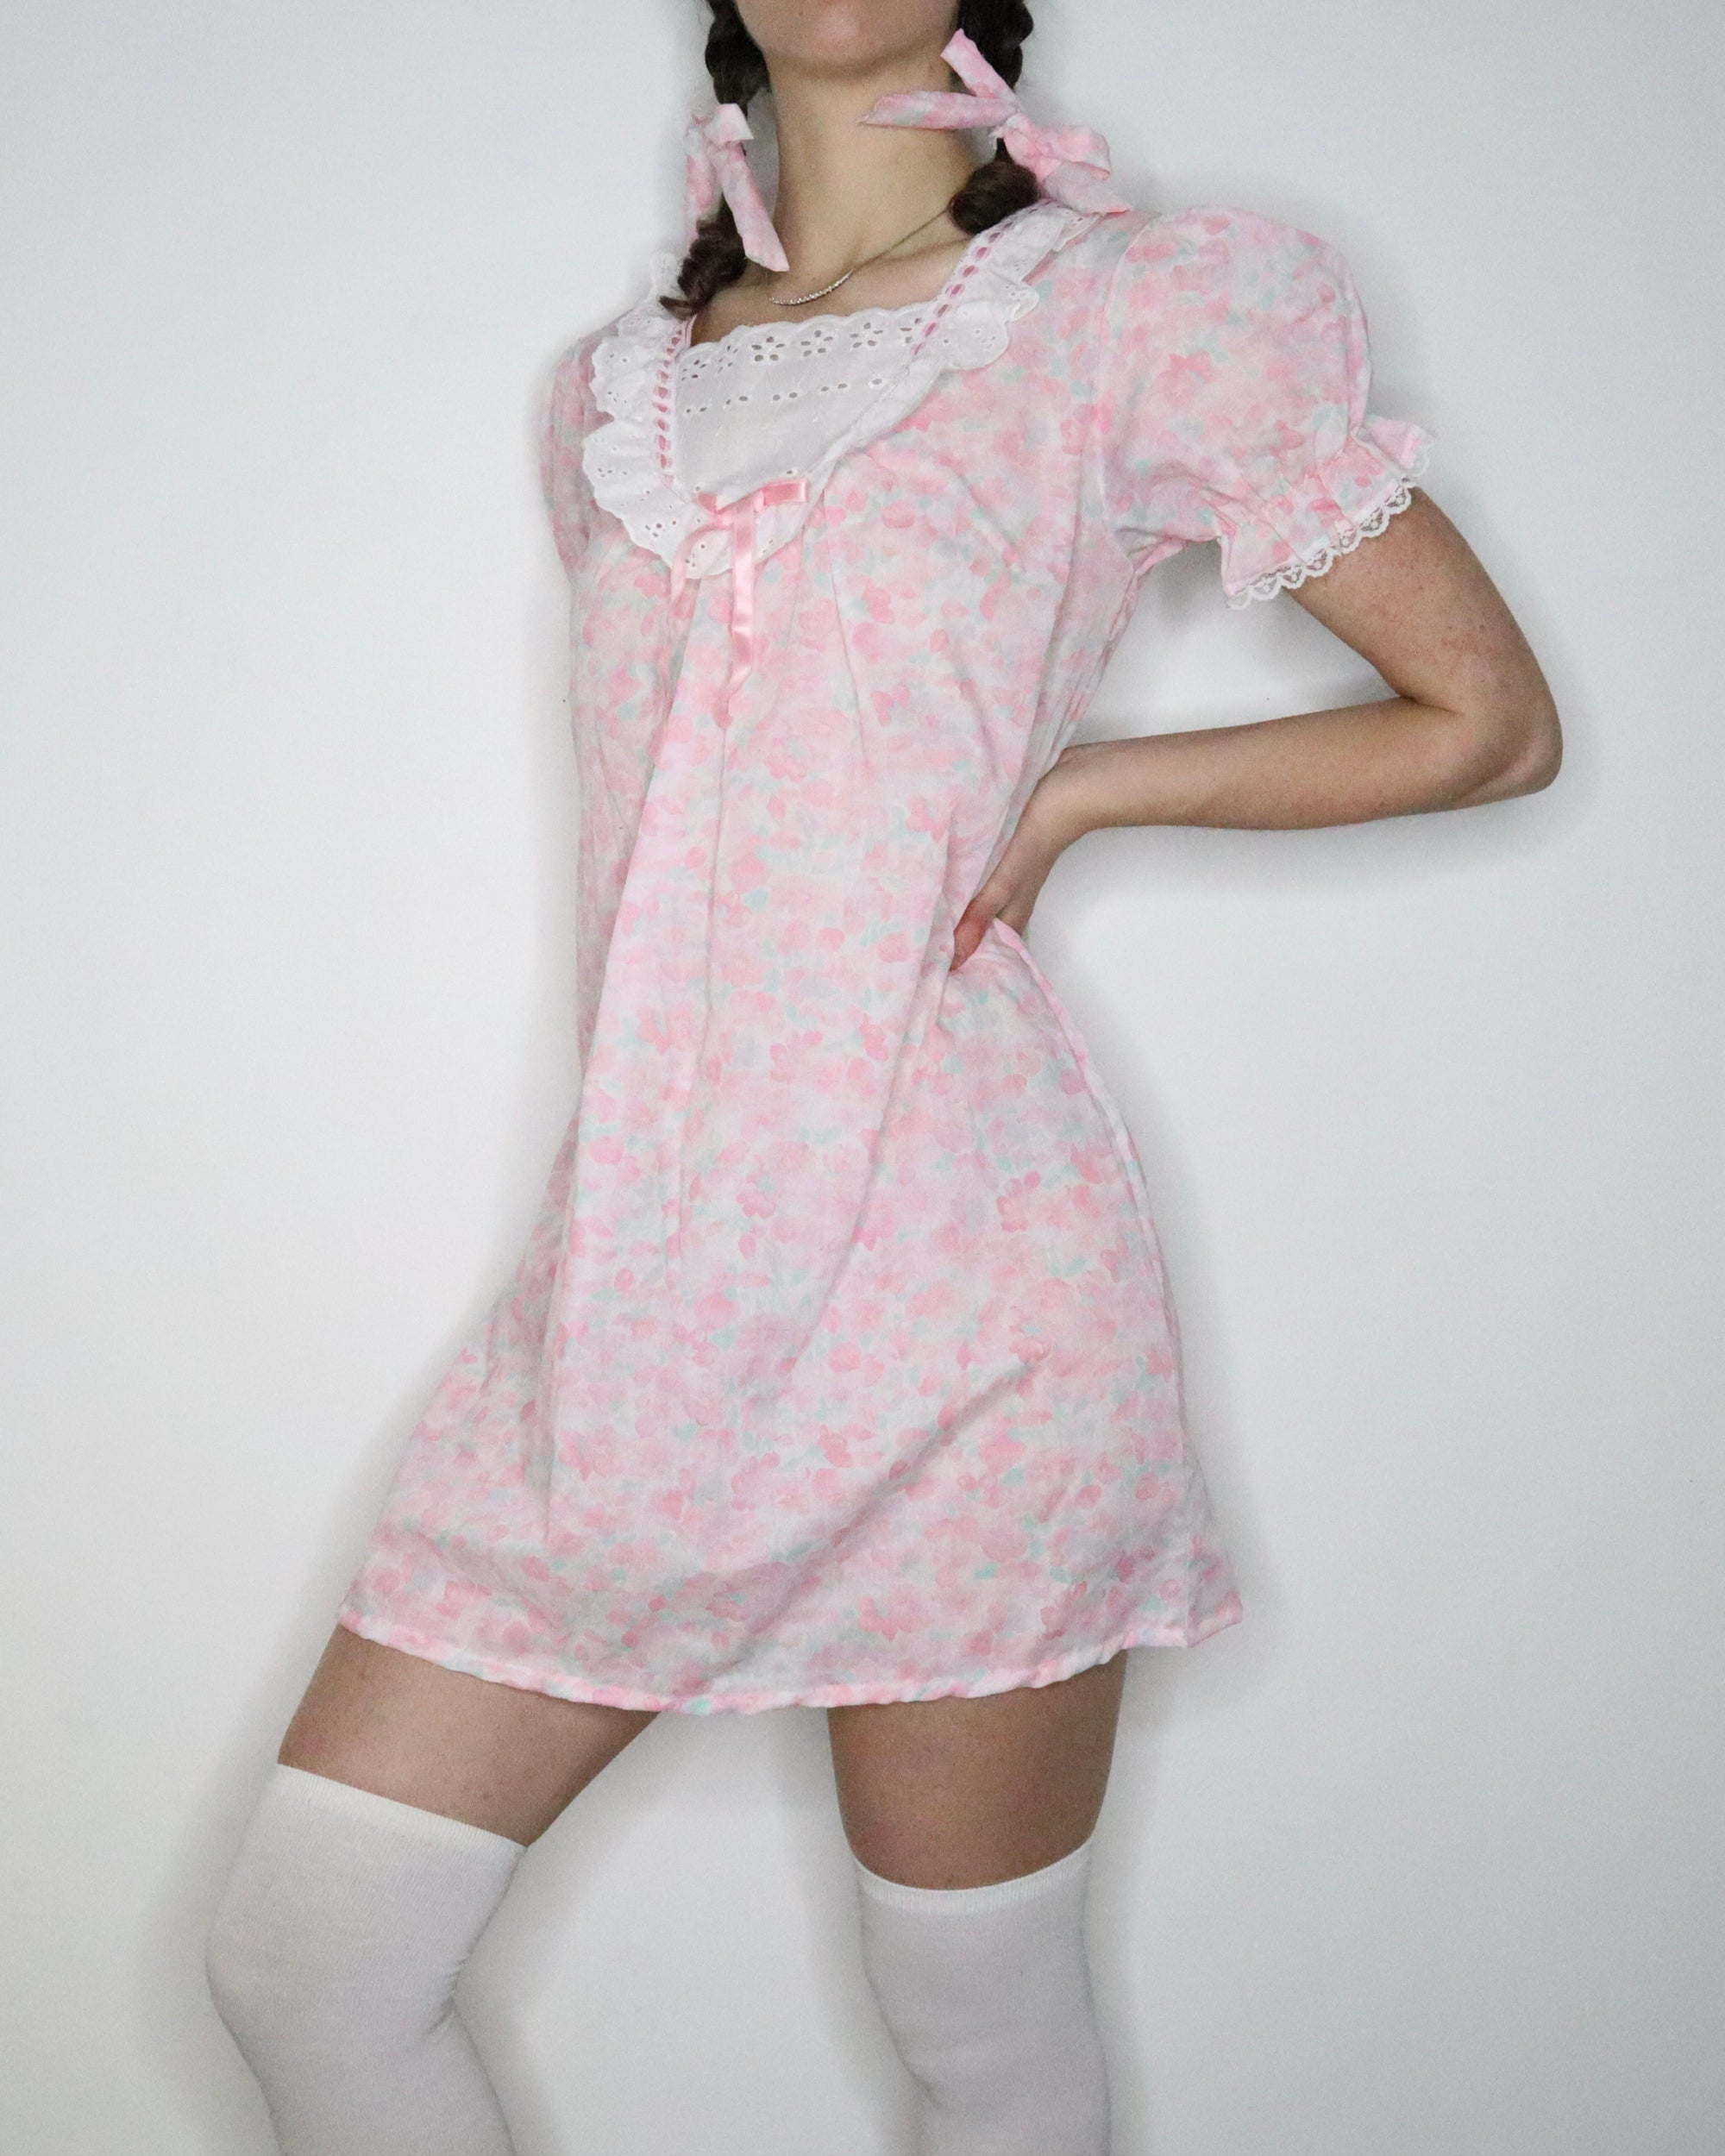 Pink Babydoll Nightgown (M-L)